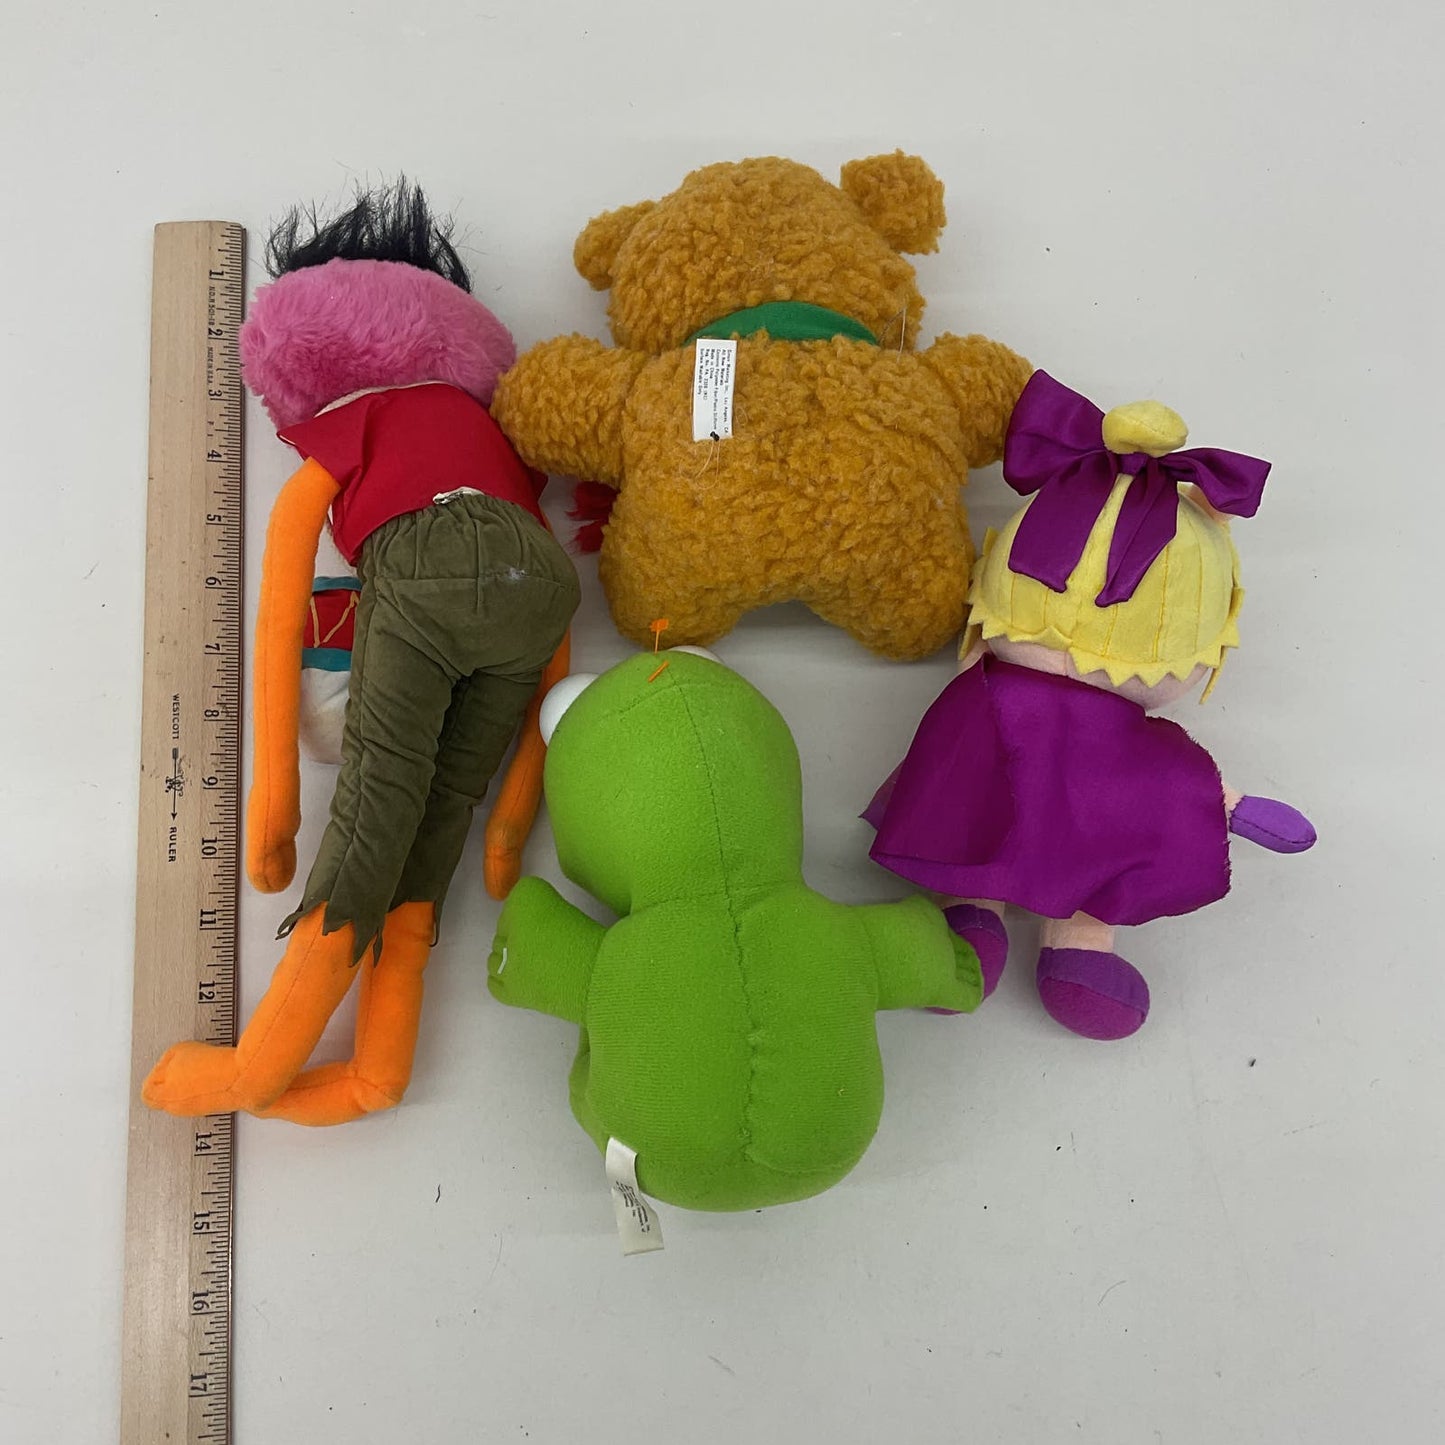 Muppets LOT Miss Piggy Kermit Animal Plush Dolls Stuffed Animals - Warehouse Toys